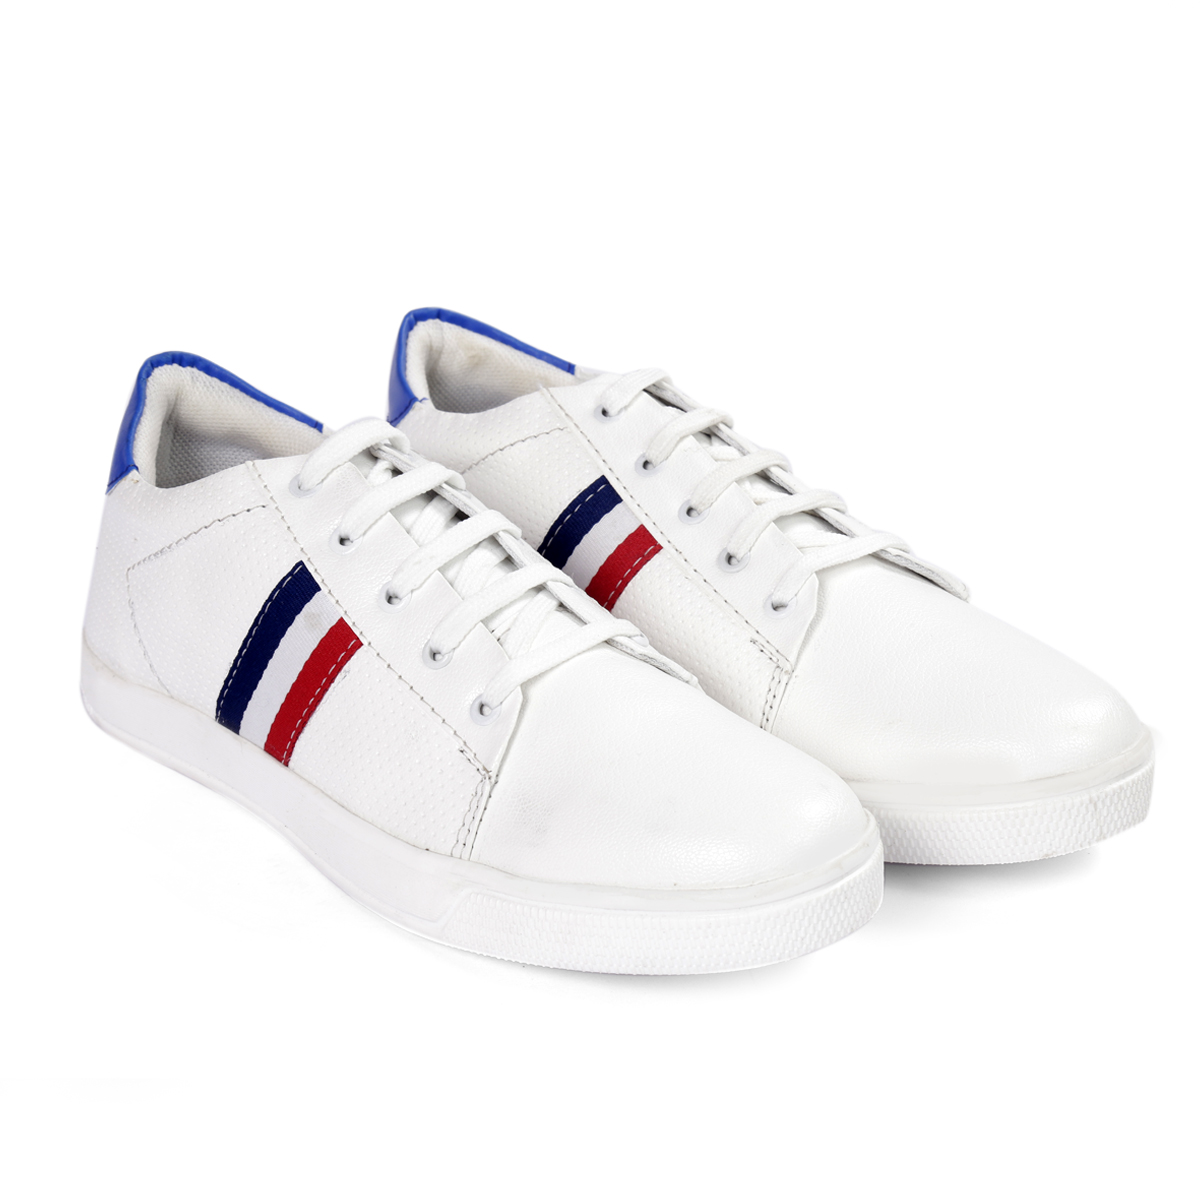 Buy BUCIK Men's White Synthetic Leather Smart Casual Sneakers Online ...